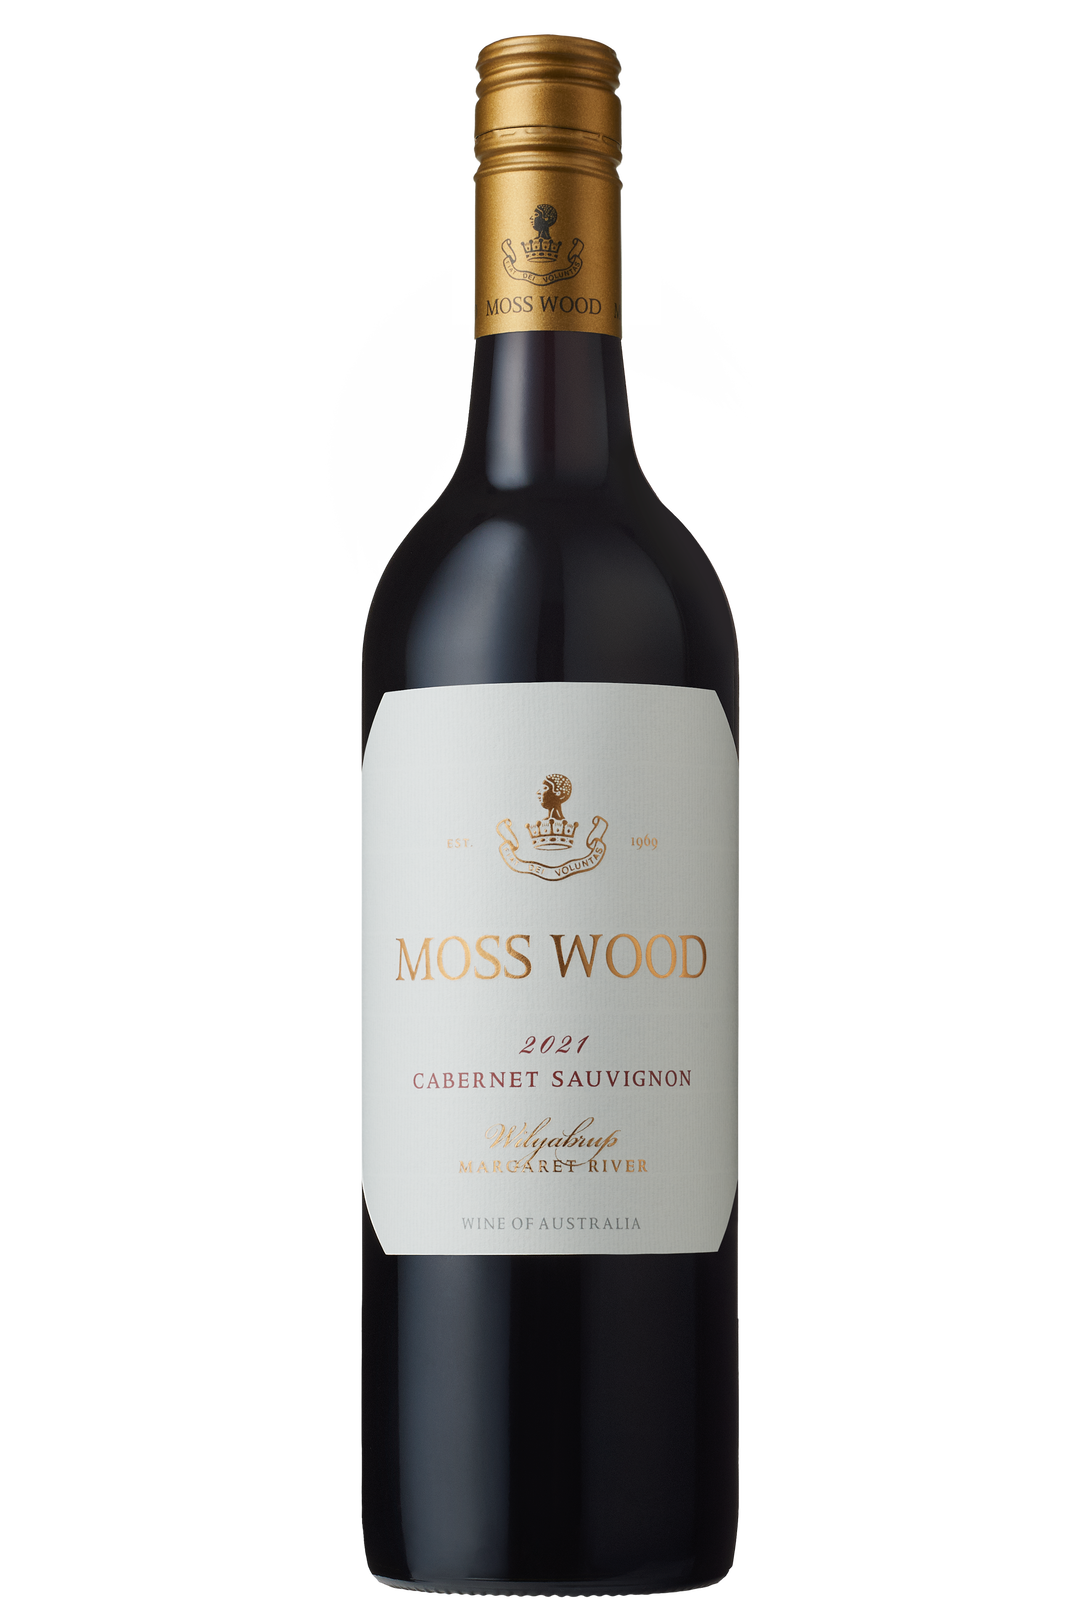 Moss Wood cabernet sauvignon 2021